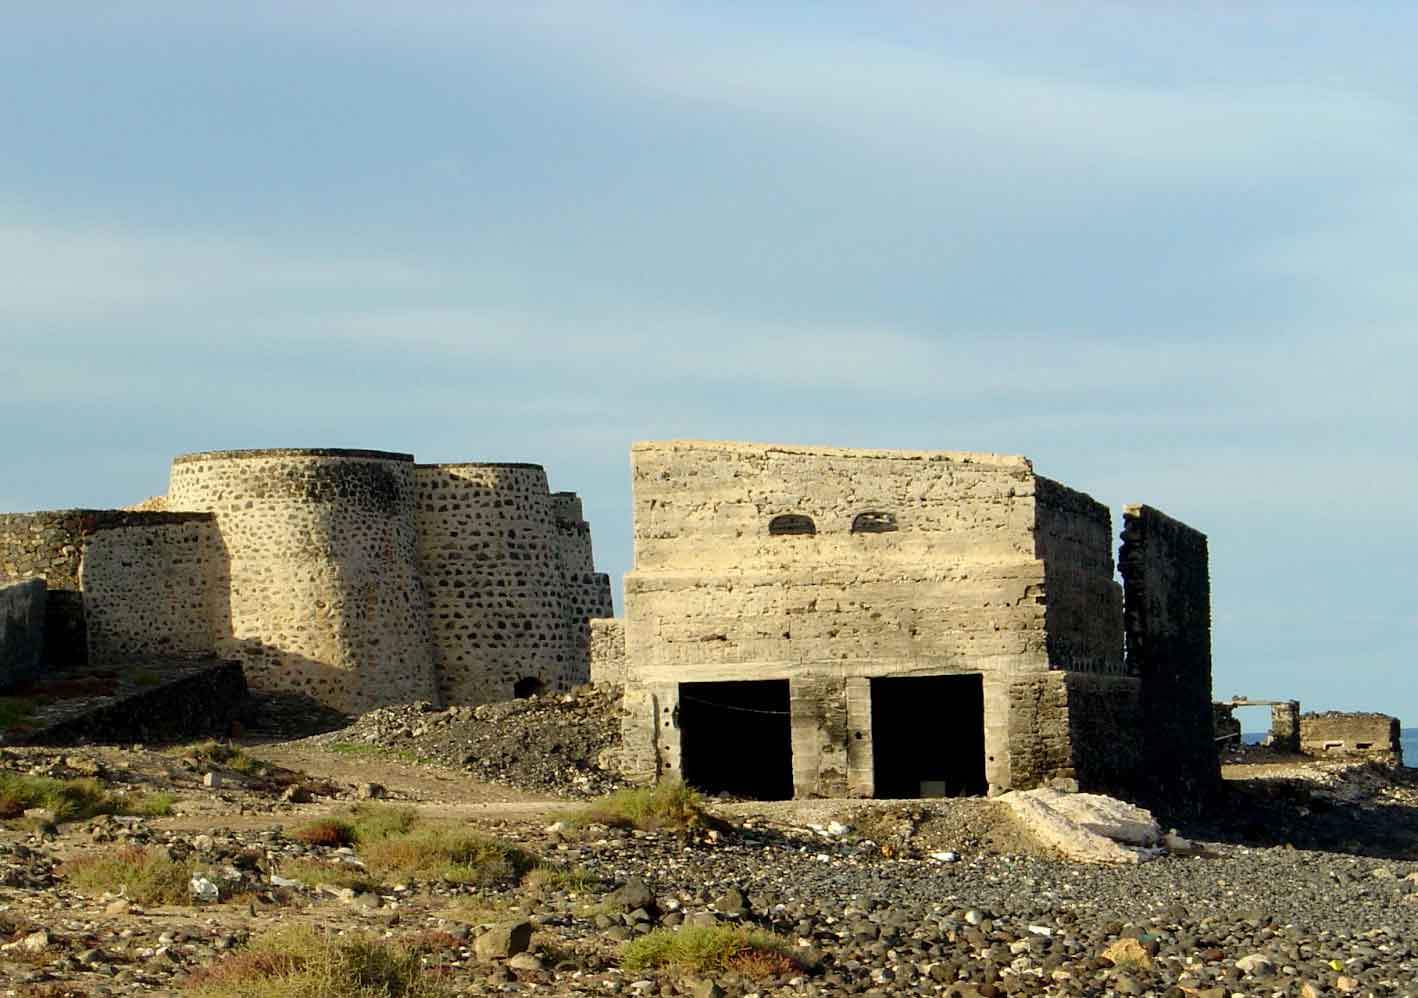 Fuertecharter | Fuerteventura History: lime kilns